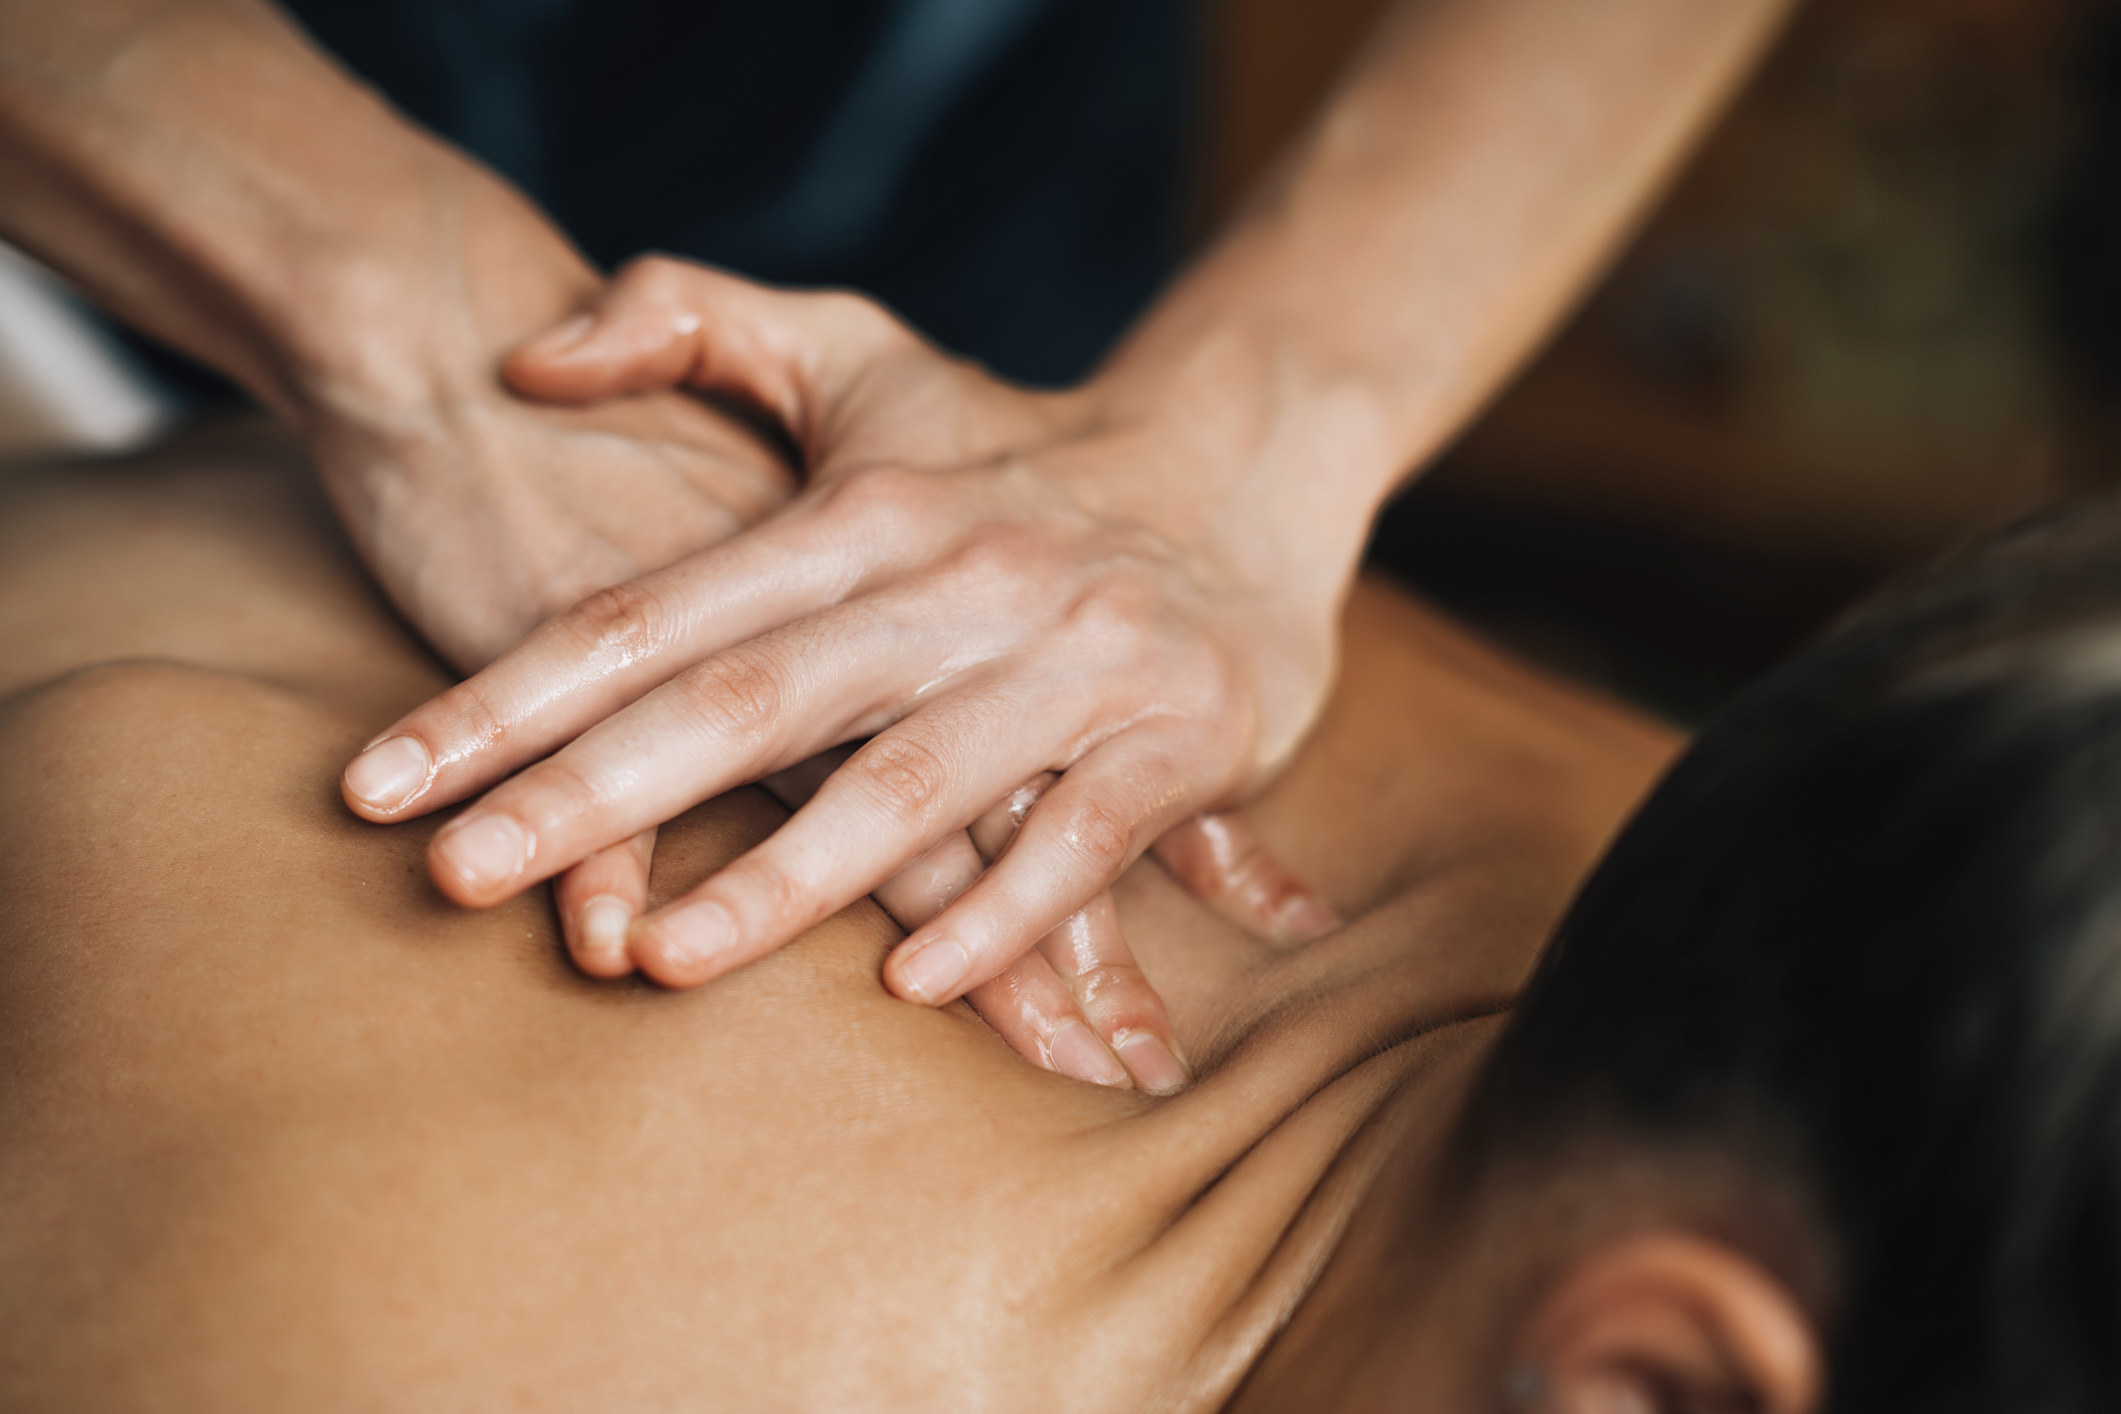 A masseur massaging someone